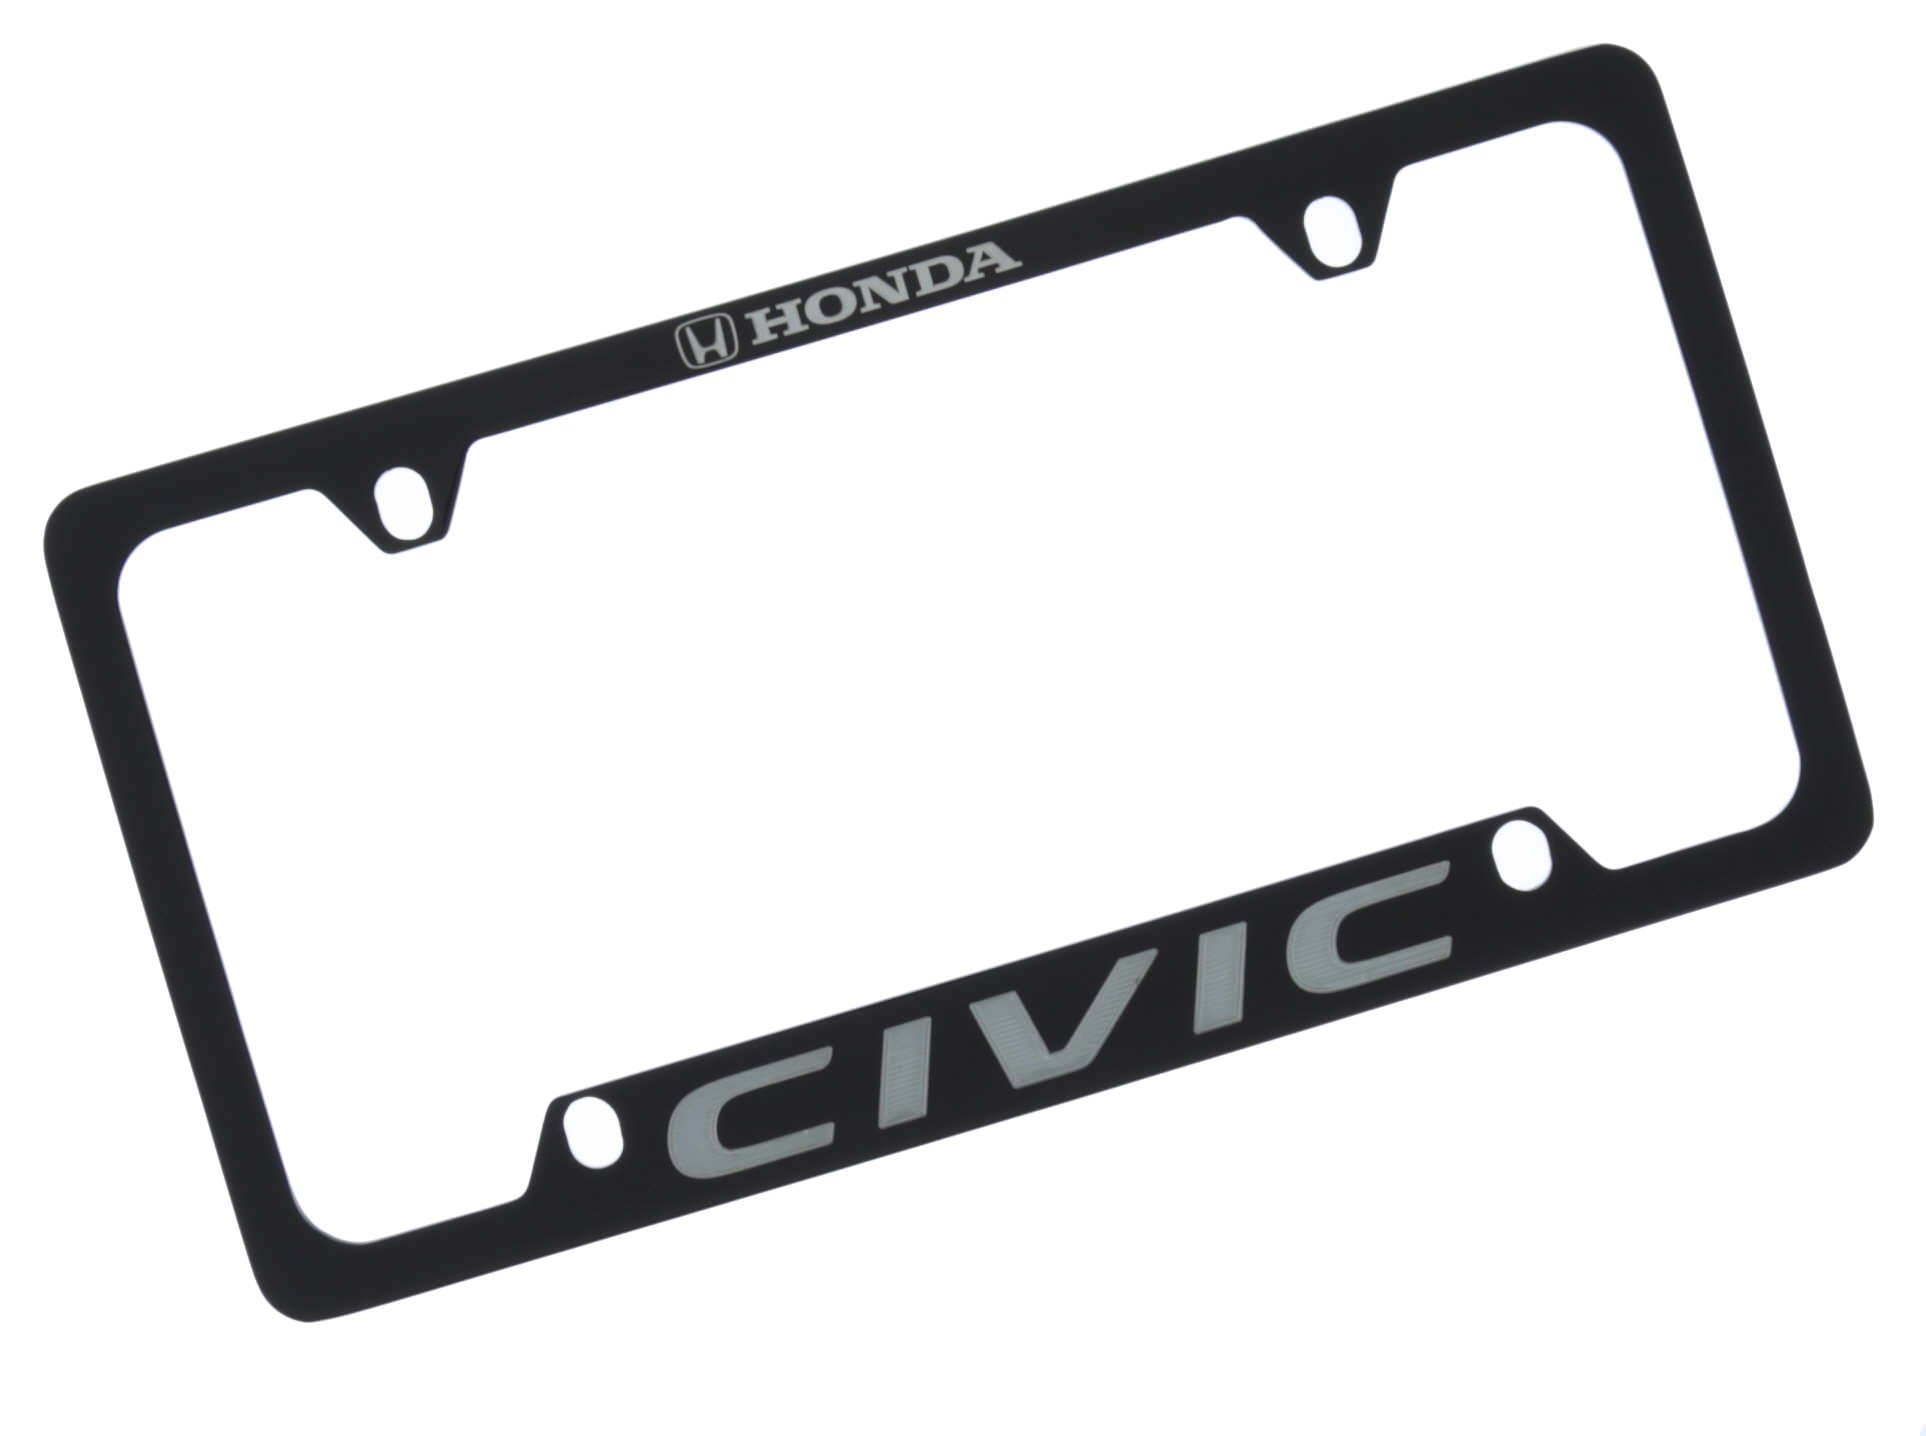 Honda,Civic,License Plate Frame